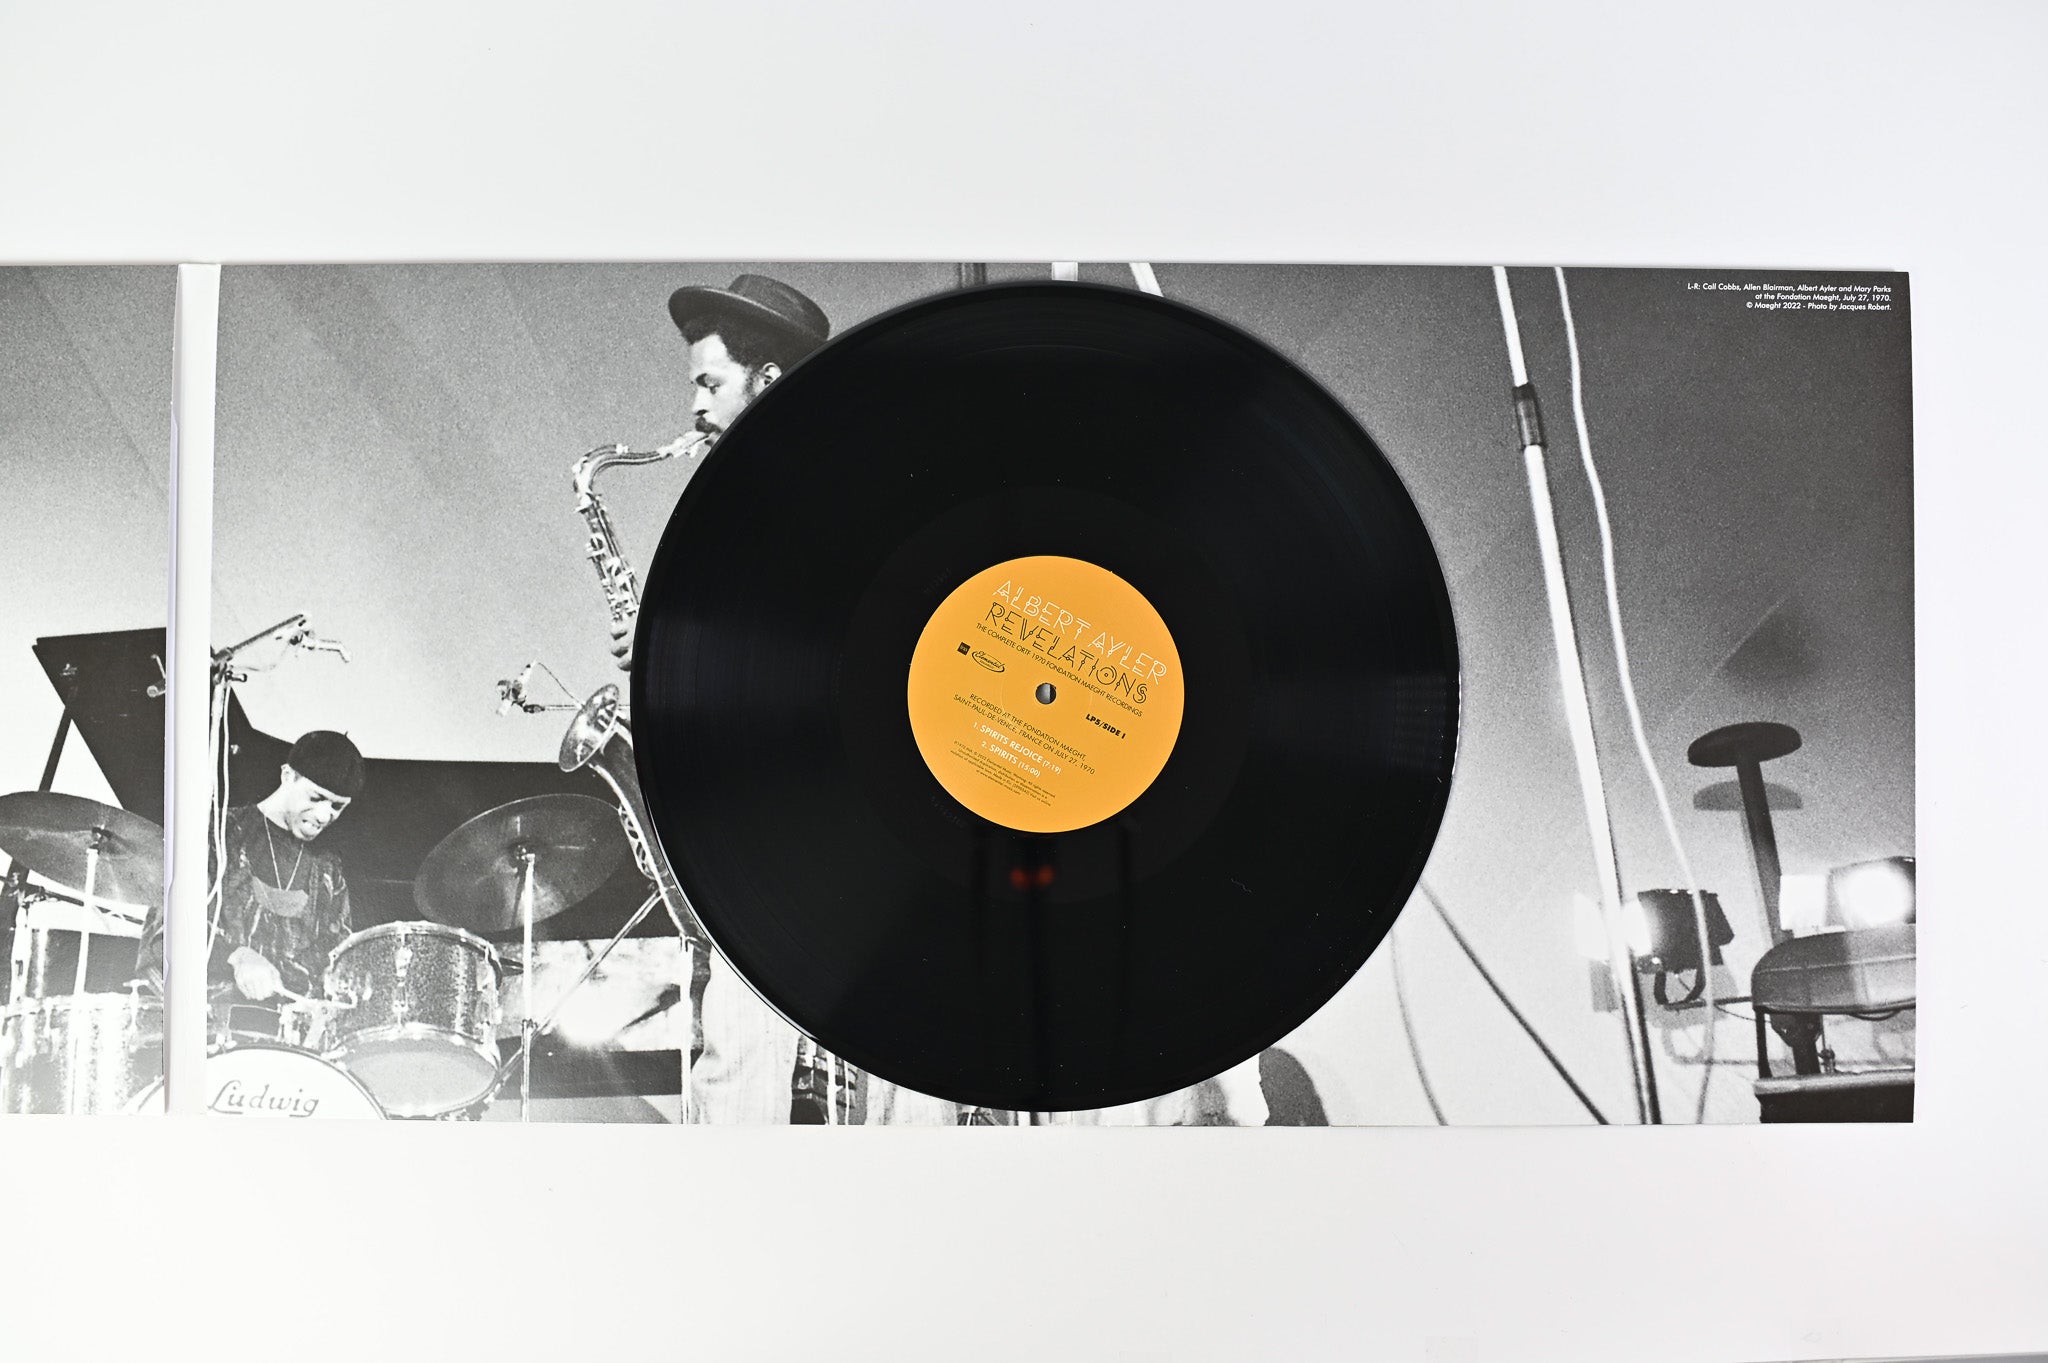 Albert Ayler - Revelations - The Complete ORTF 1970 Fondation Maeght Recordings on Elemental RSD 2022 Ltd Numbered